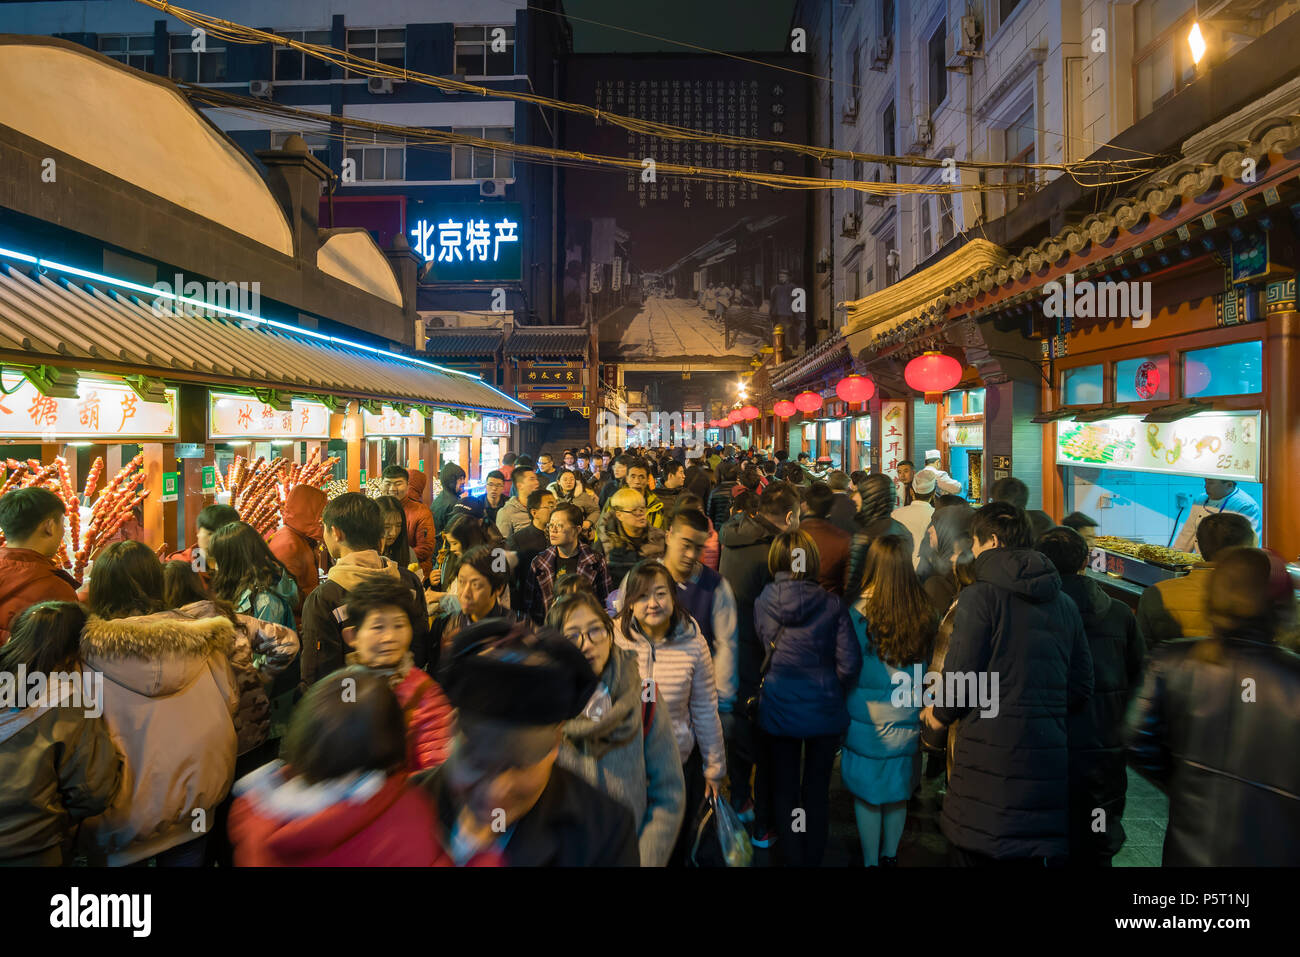 People at the Wangfujing Snack Street in Beijing Stock Photo